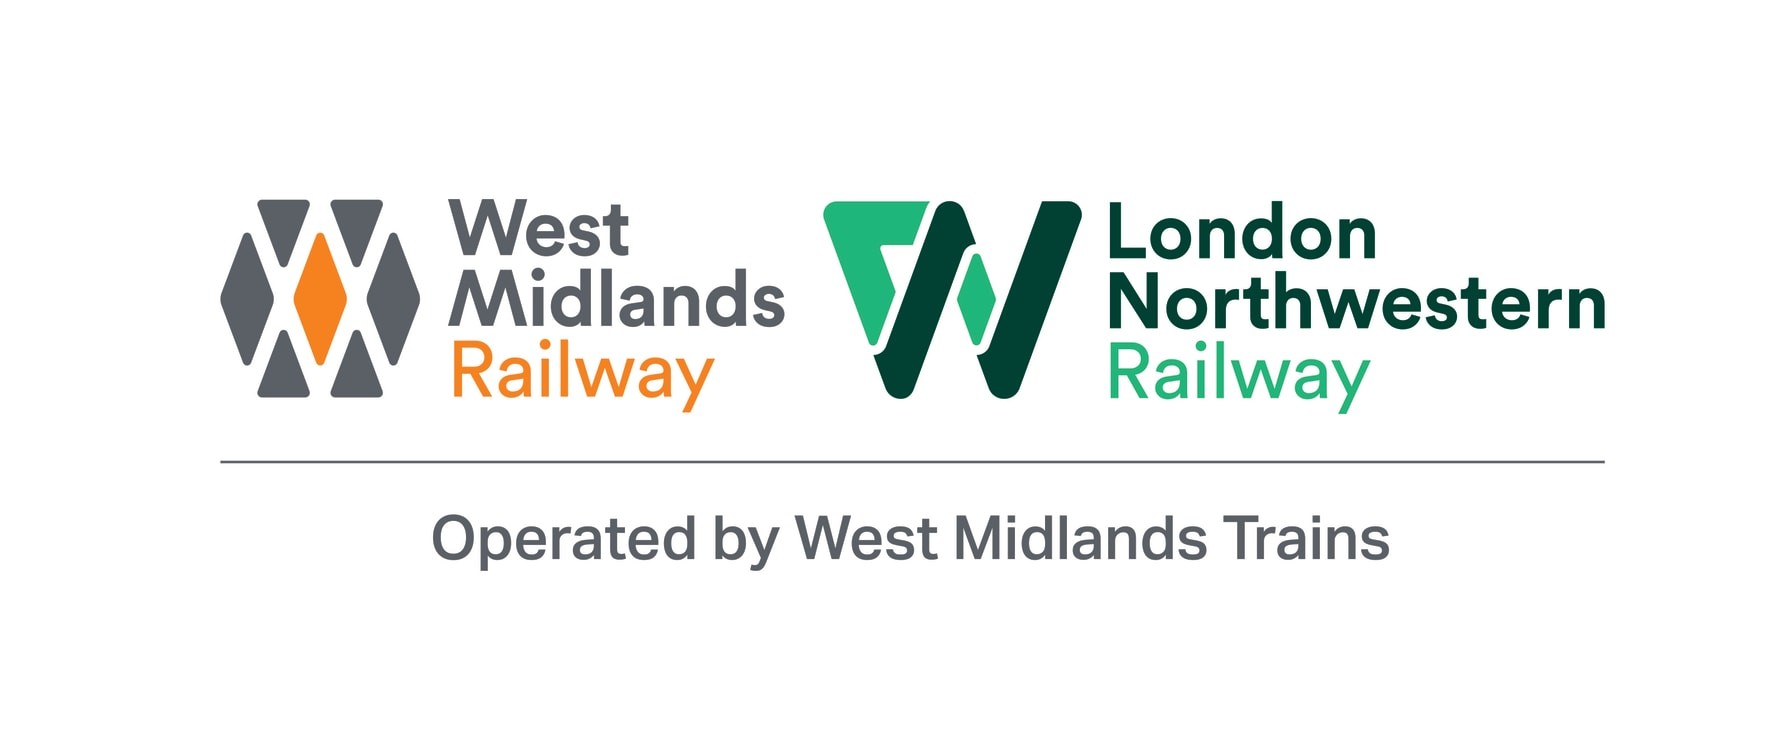 West Midlands Trains statement in response to RMT